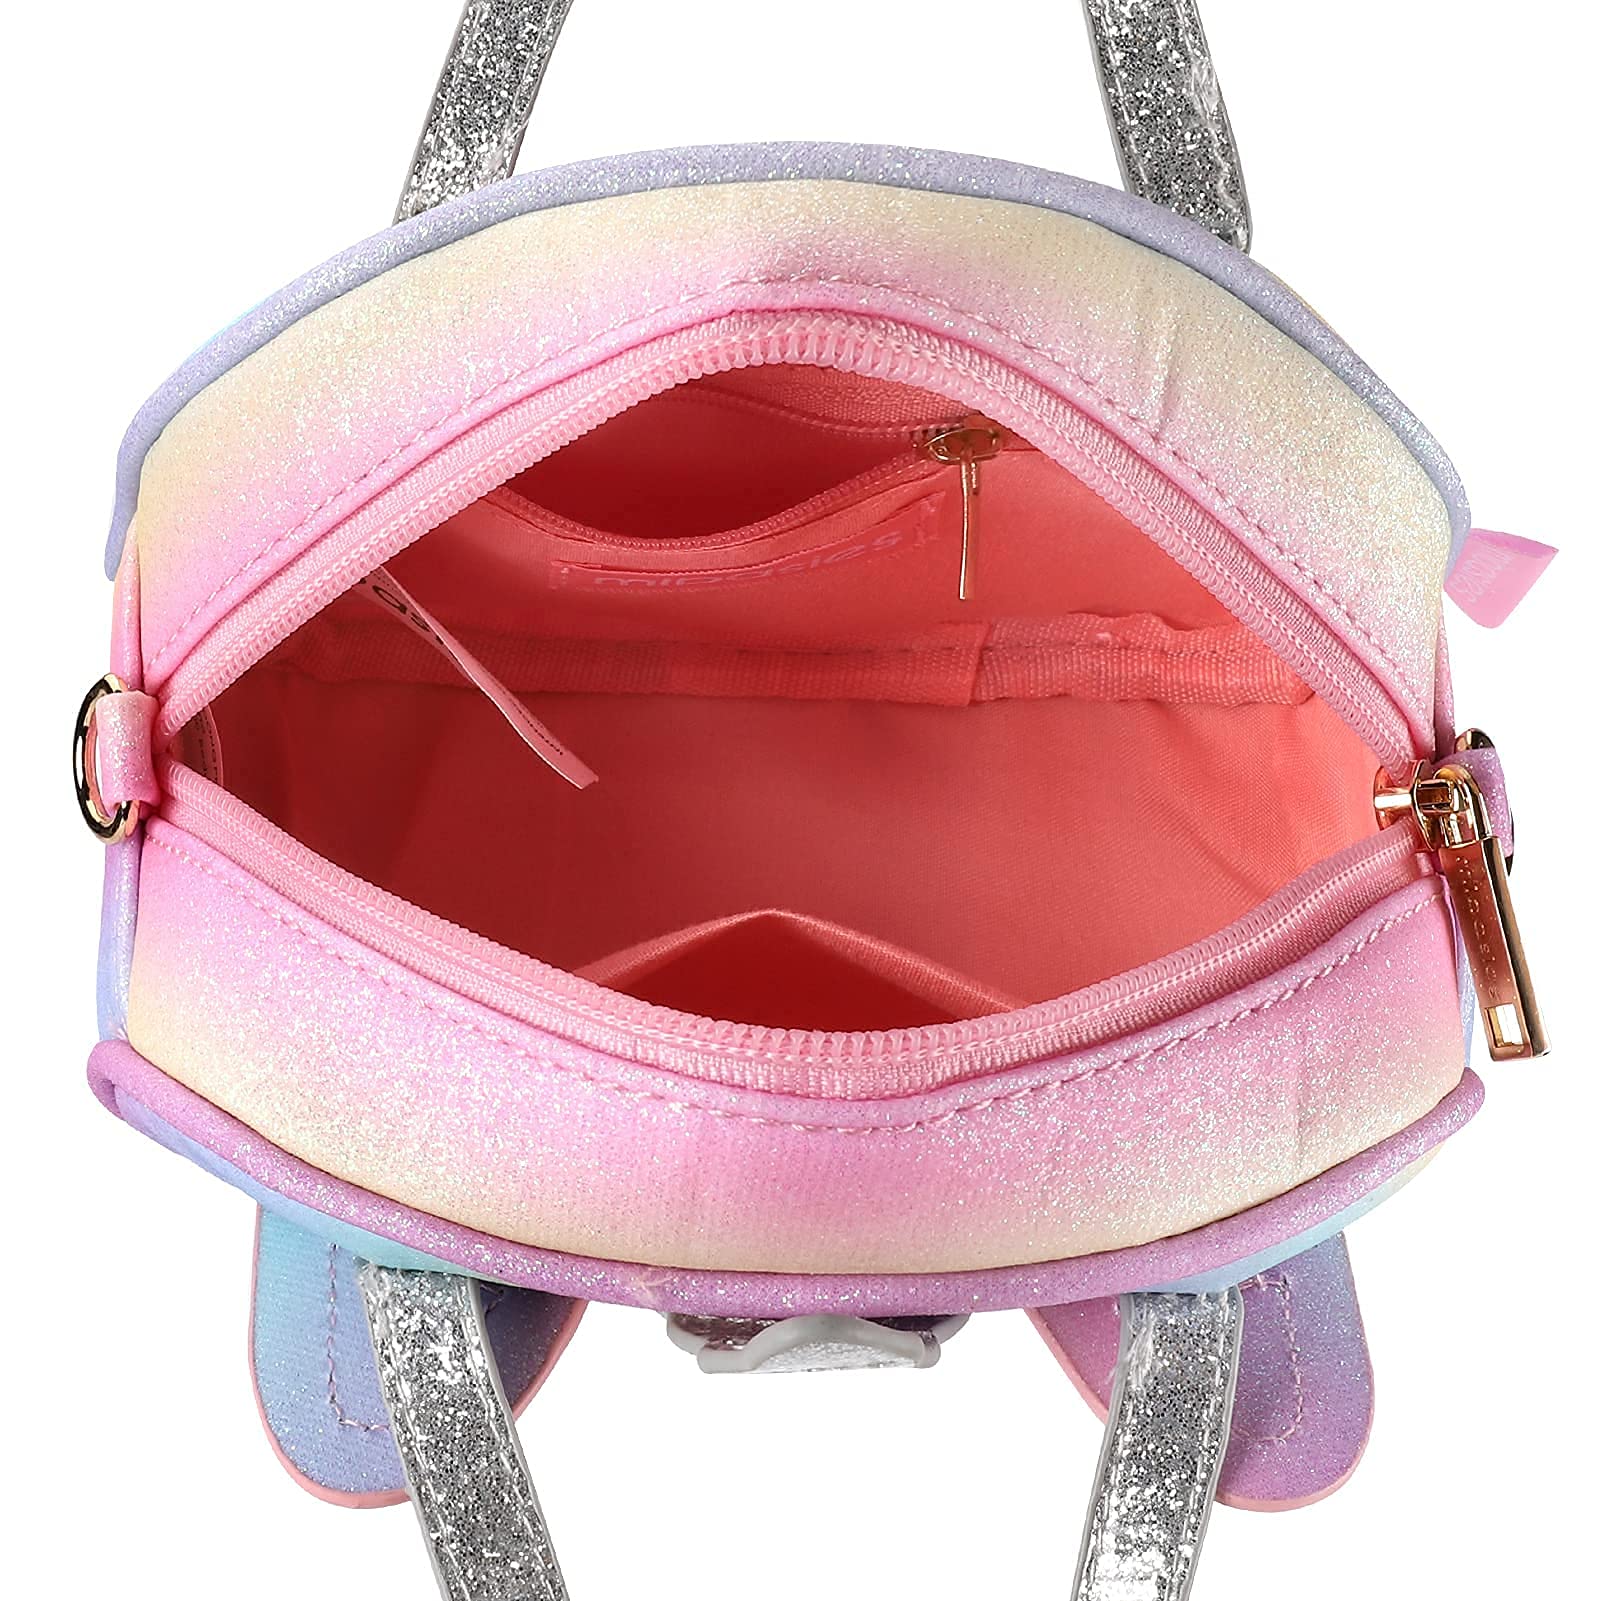 mibasies Toddler Purse for Little Girls Handbags Kids Age 3-8